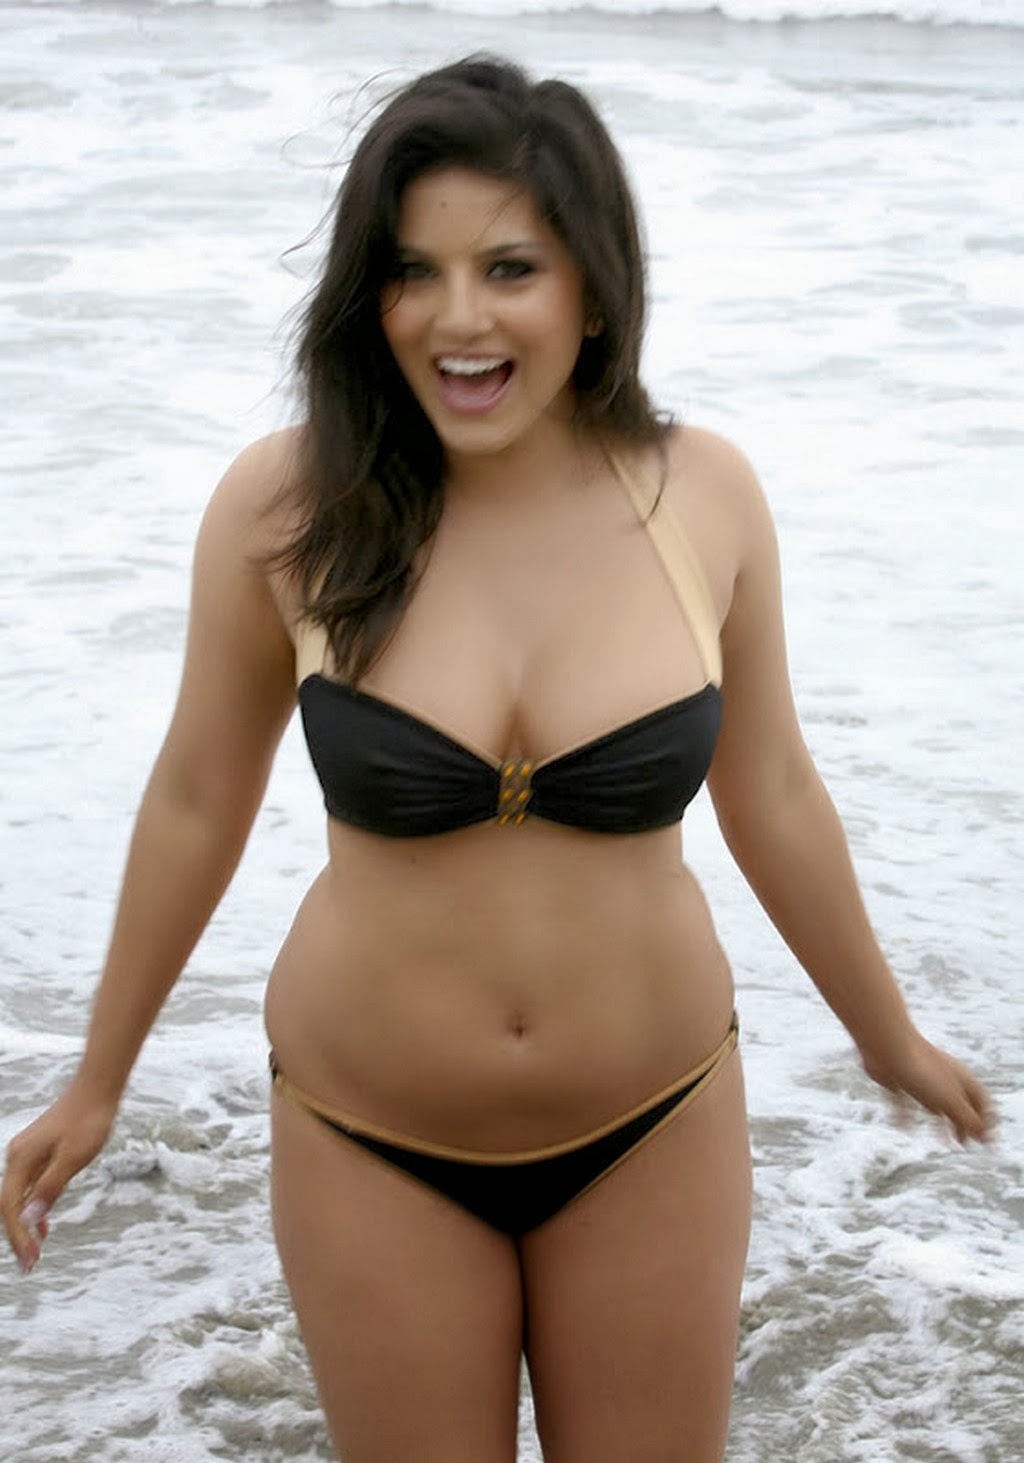 Sunny Leone Hot In Bikini Pictures Hot Desi Girls